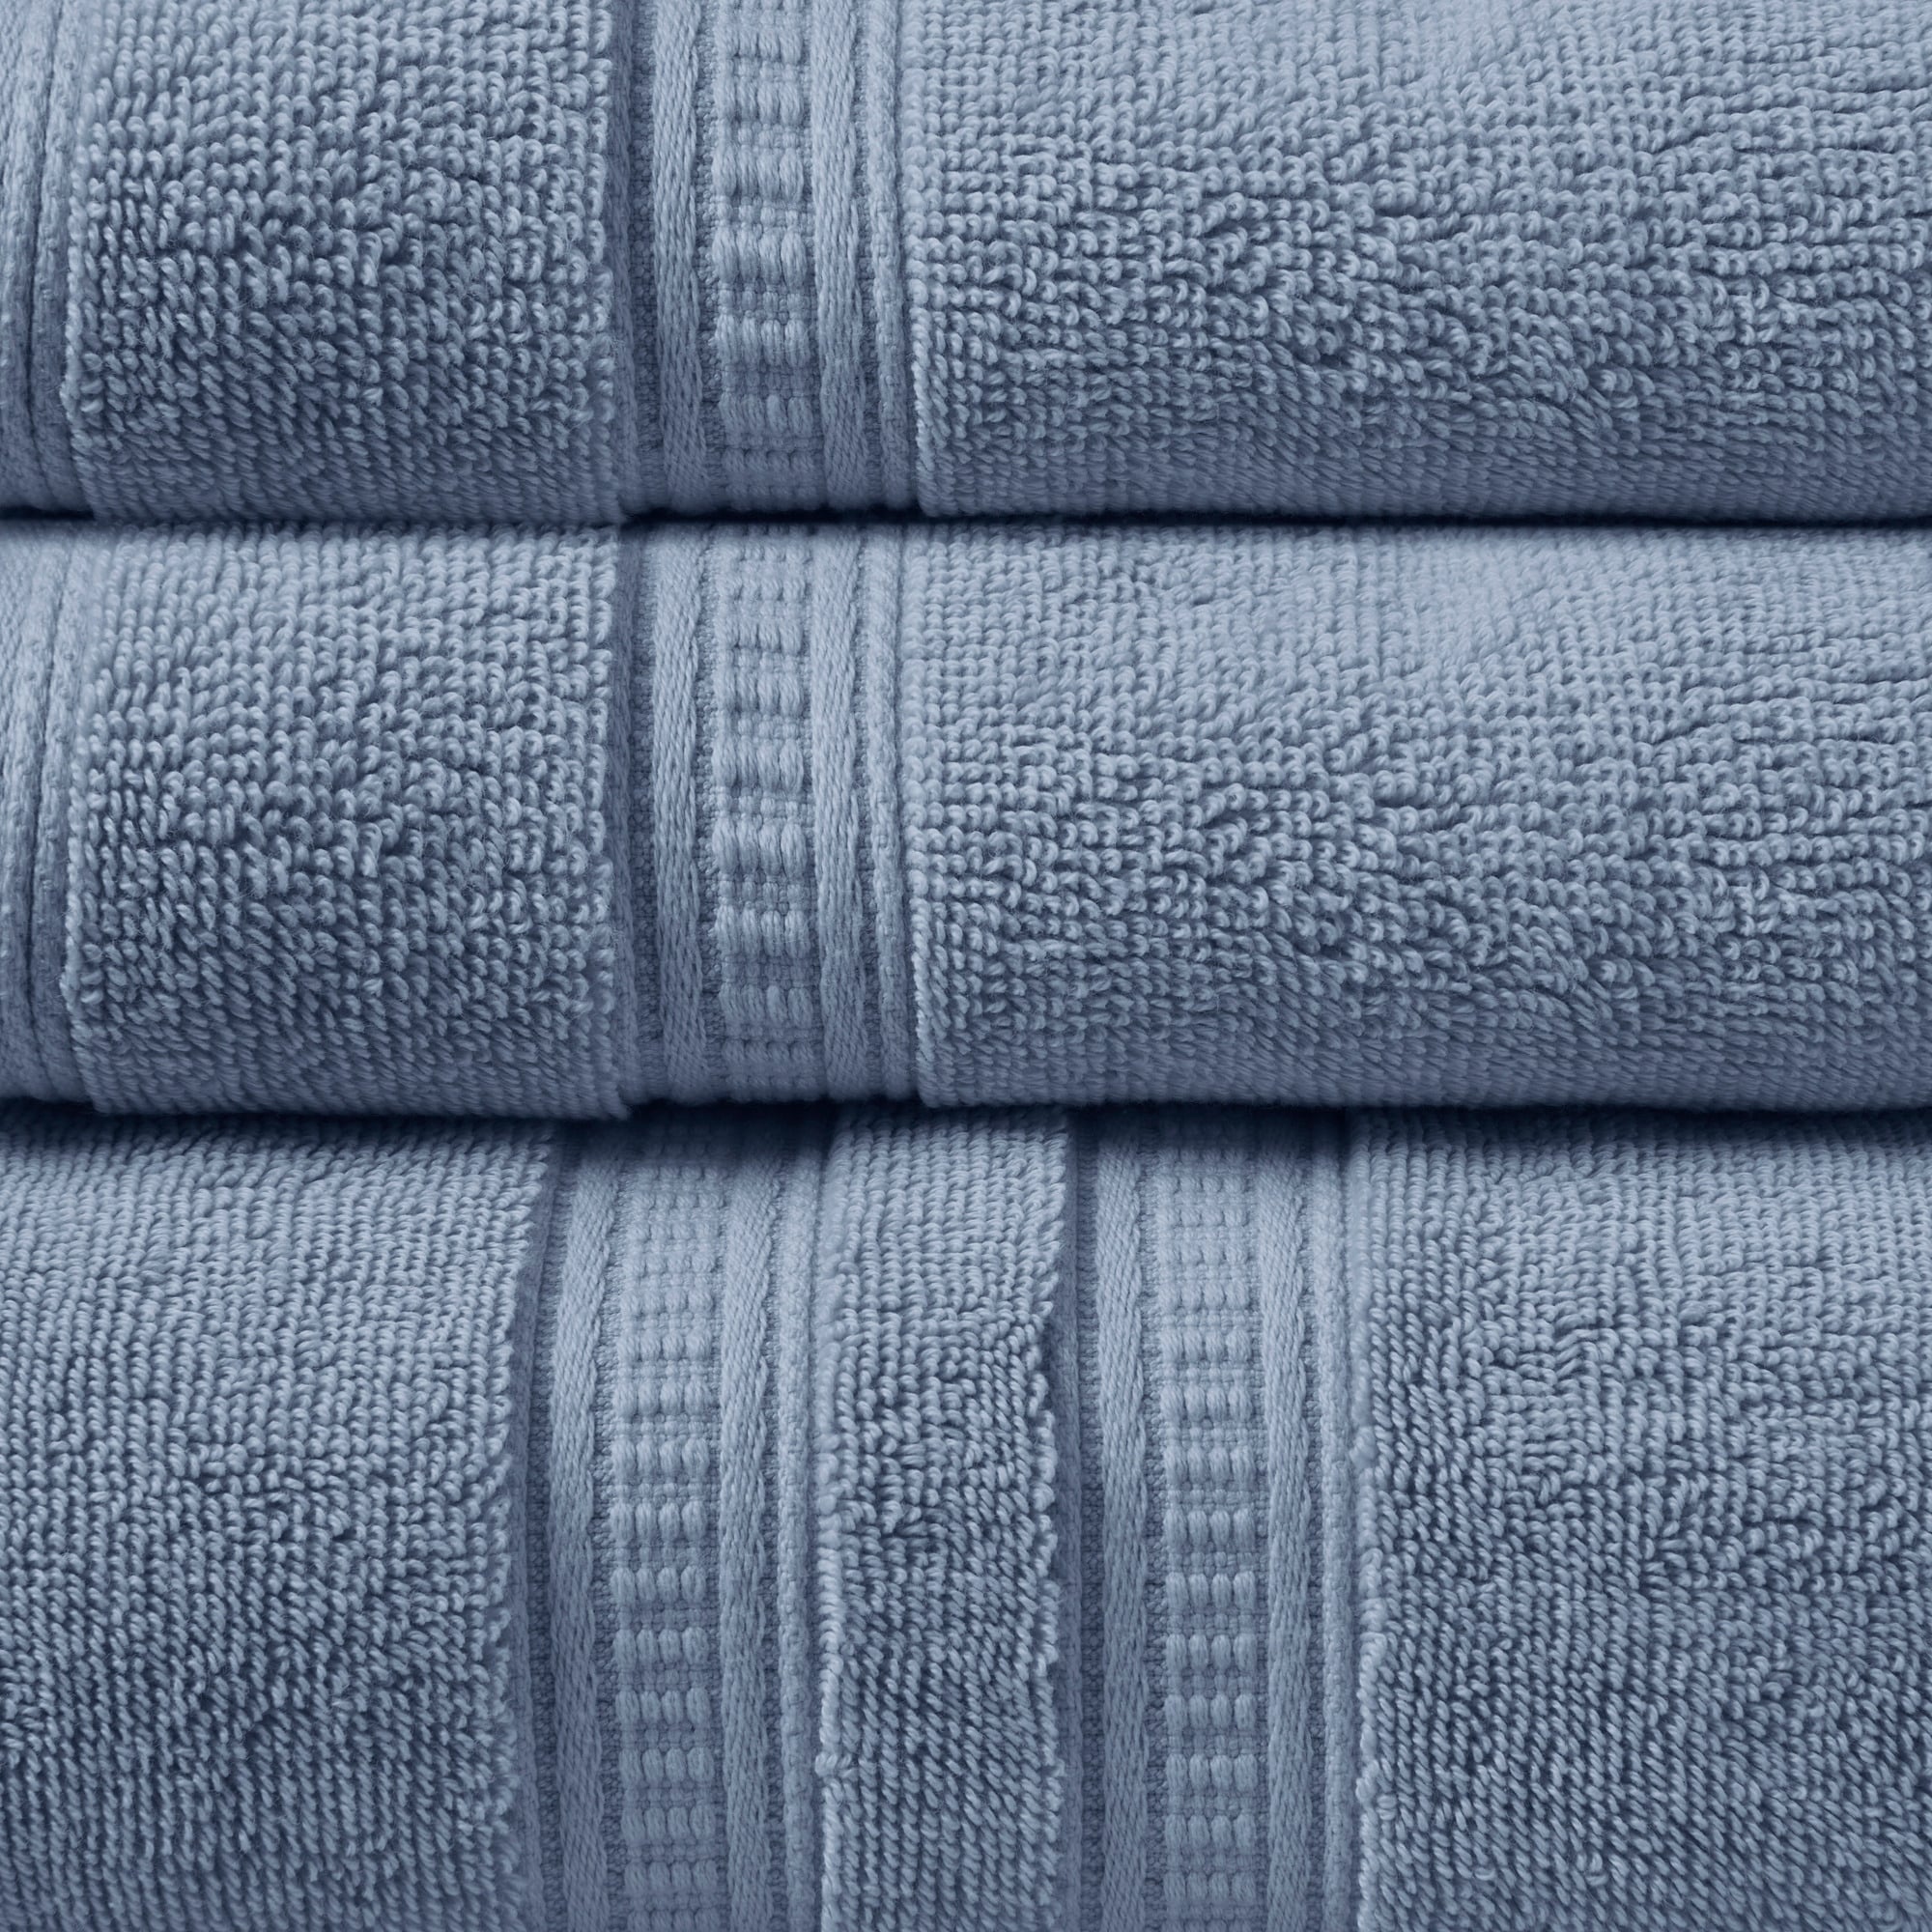 Baltic Linen Signet Ultra Absorbant 100 Percent Cotton Towel Set, Navy - 6 Piece